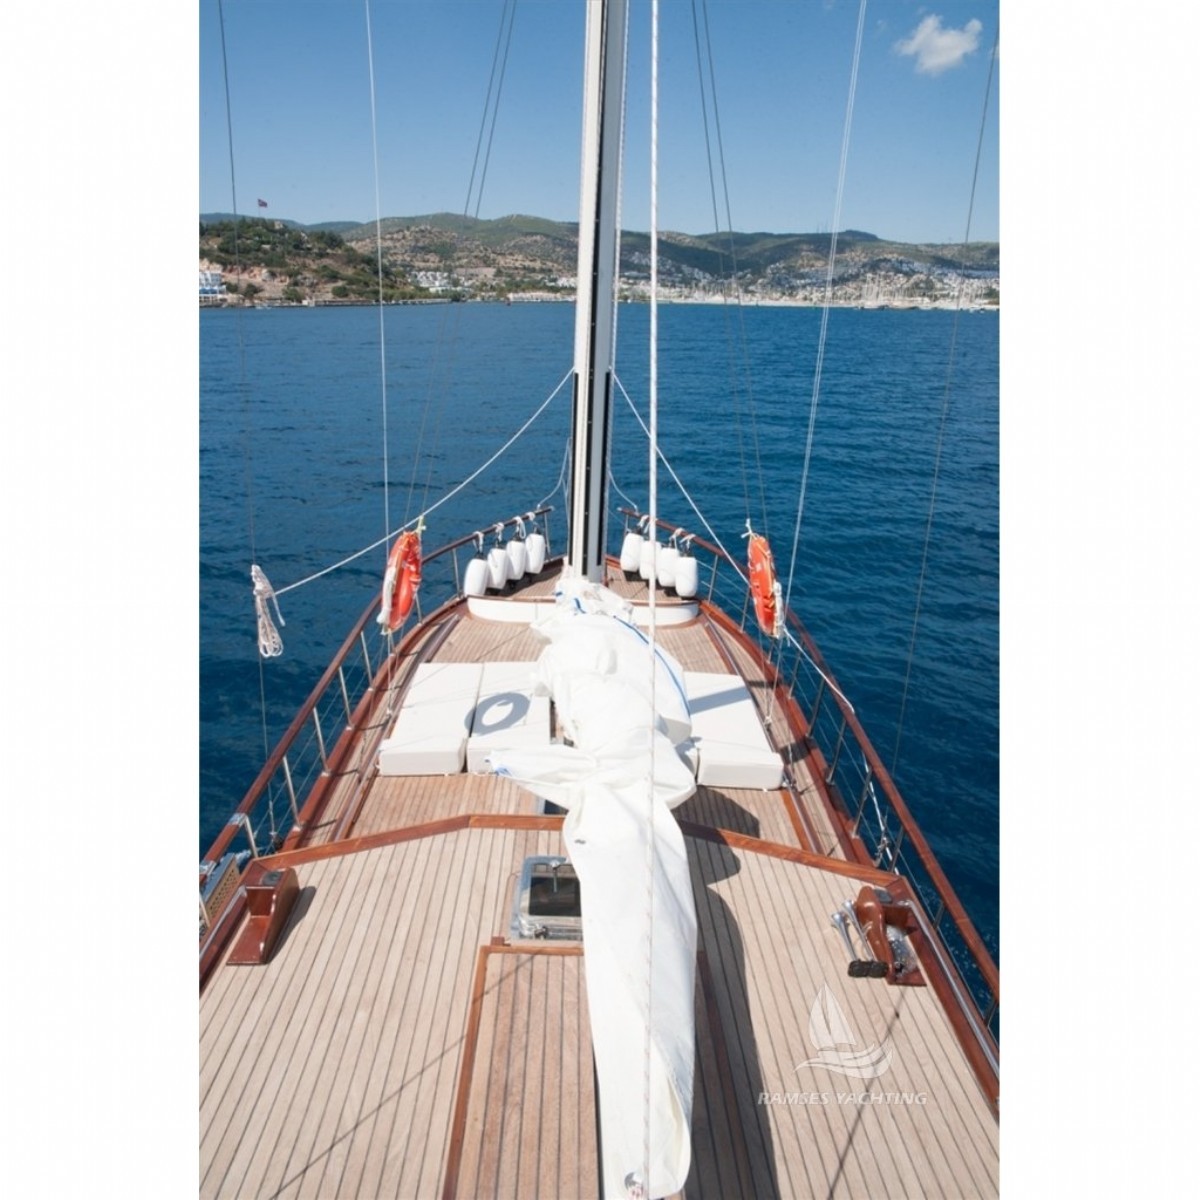 Luxury Boats | L235 - Yacht Charter Turkey 4 person Luxury Gulet | L235 | Yacht charter Turkey,Gulet charter, YachtingTurkey, gulet Turkey, cabin charter , yachtrentalsTurkey, boat charter Turkey, Bodrum yacht charter,  | 